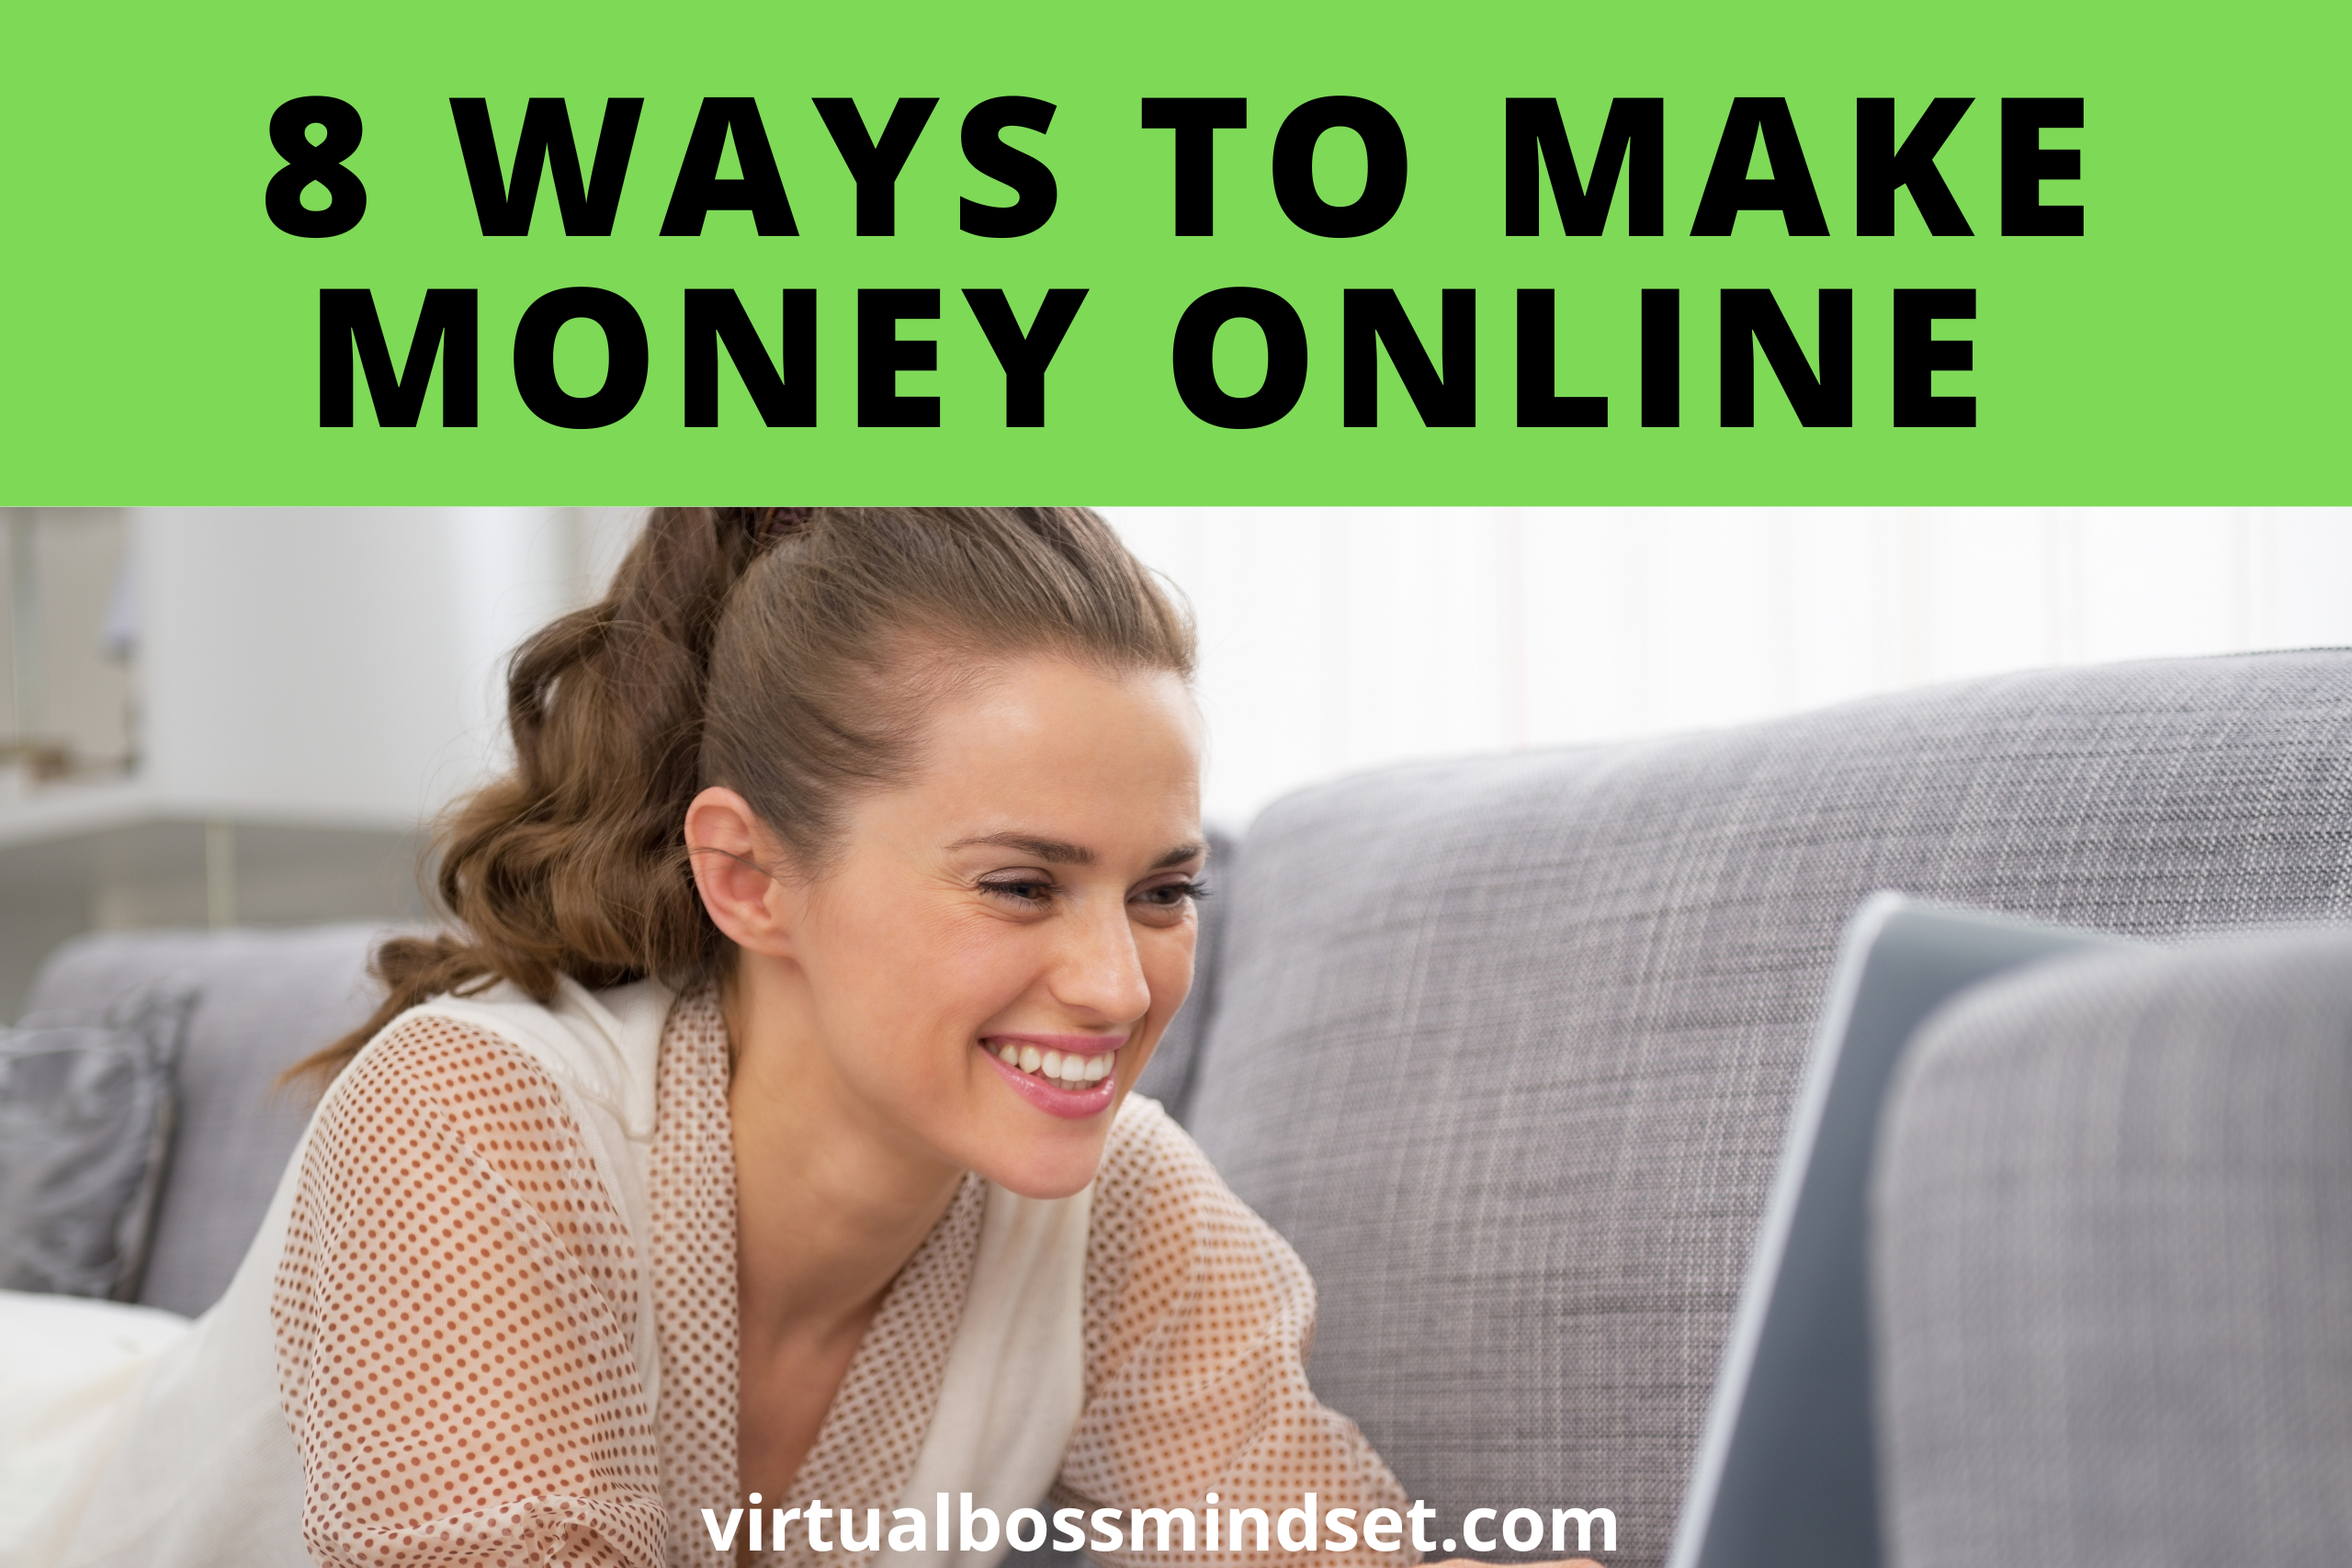 8 Ways to Make Money Online Legitimately